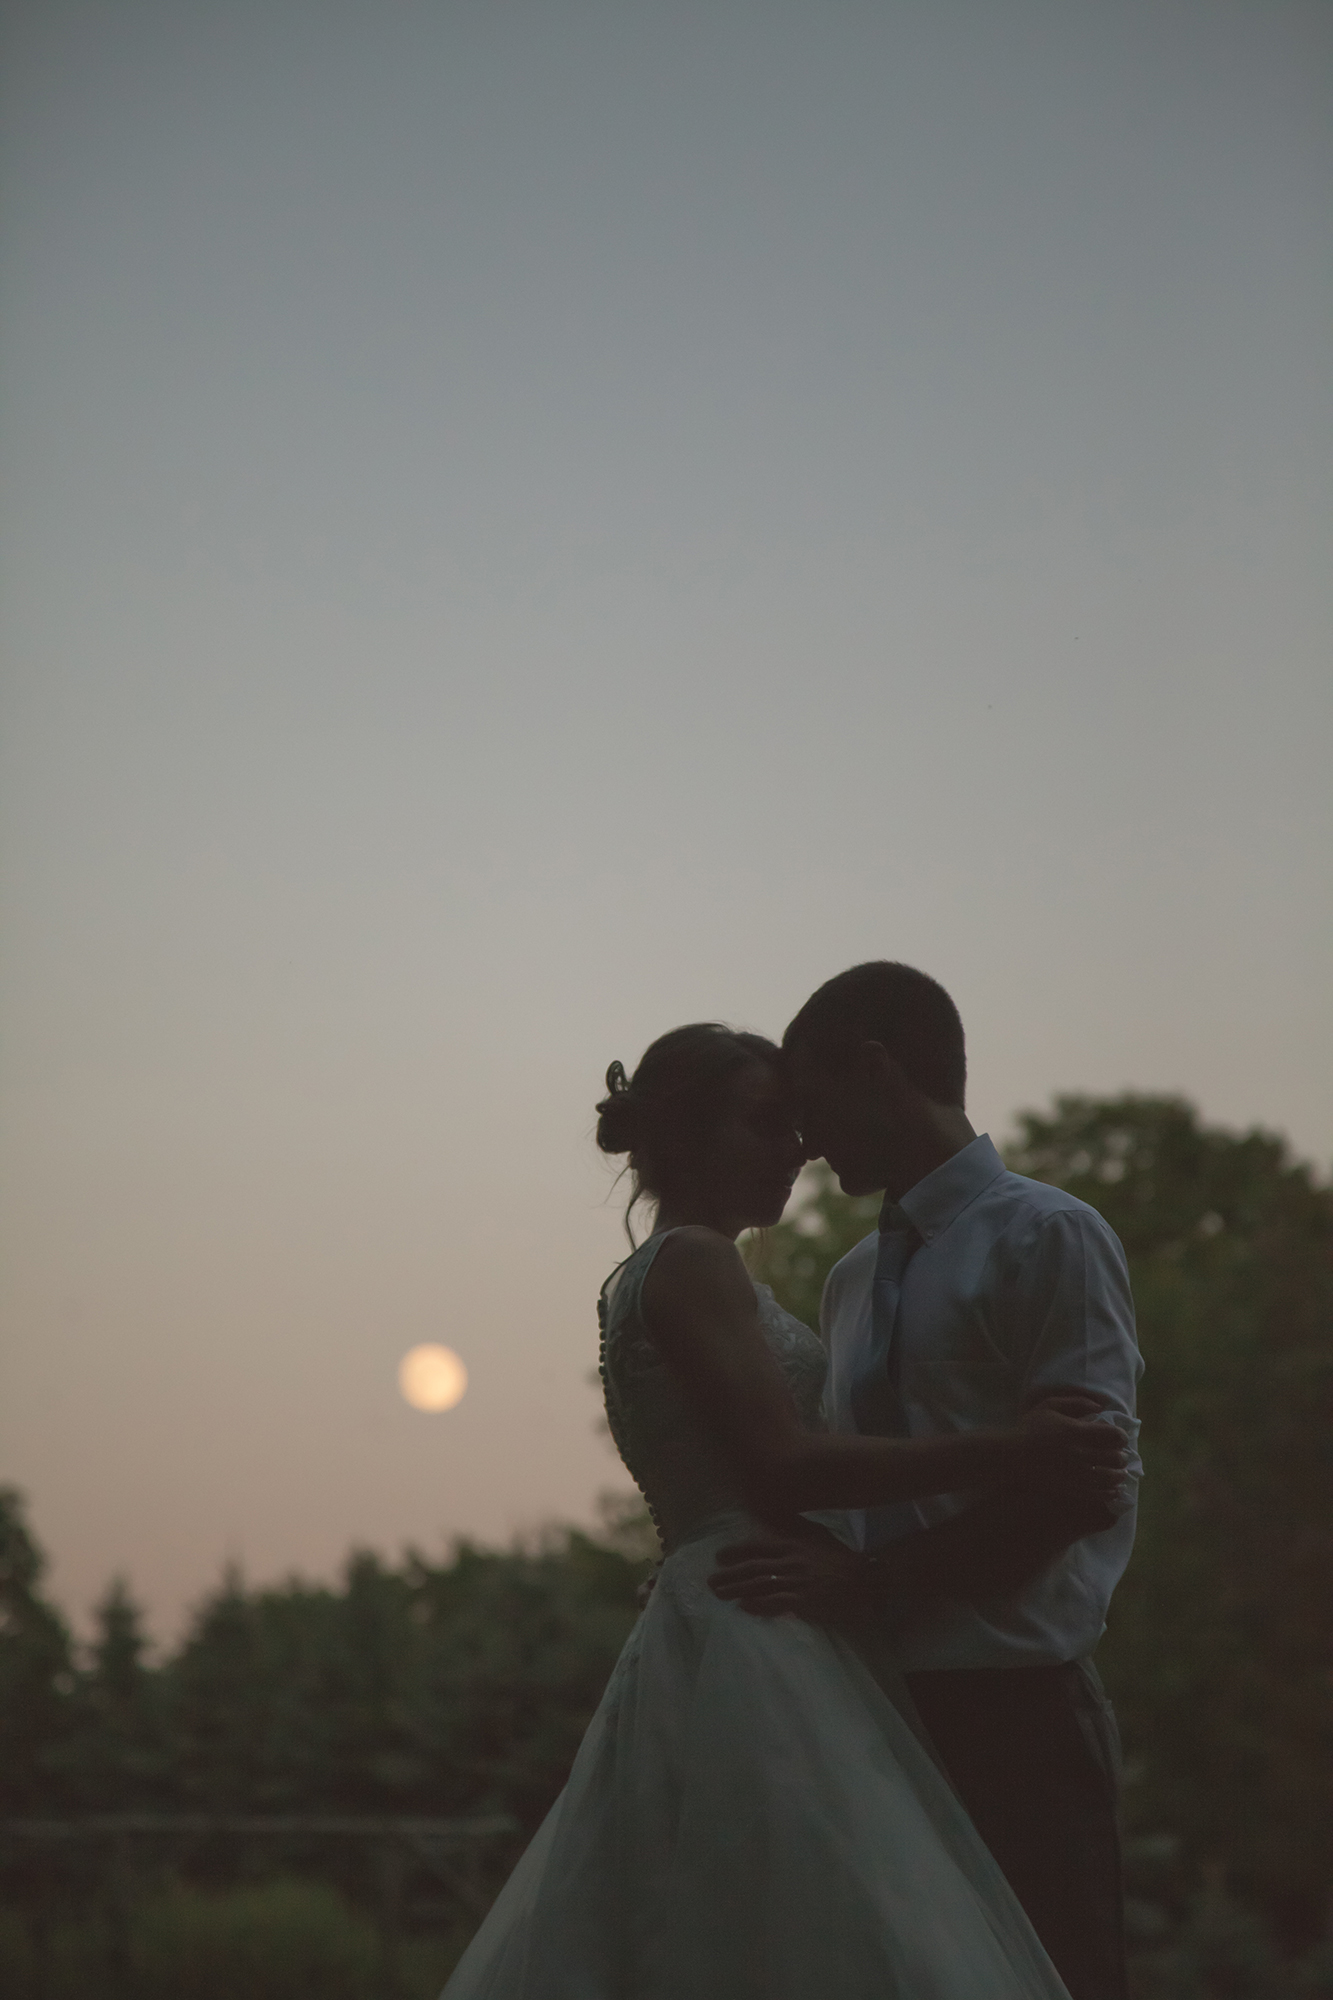  Wedding photography in Buffalo, NY of bride and groom at dusk under full moon. 